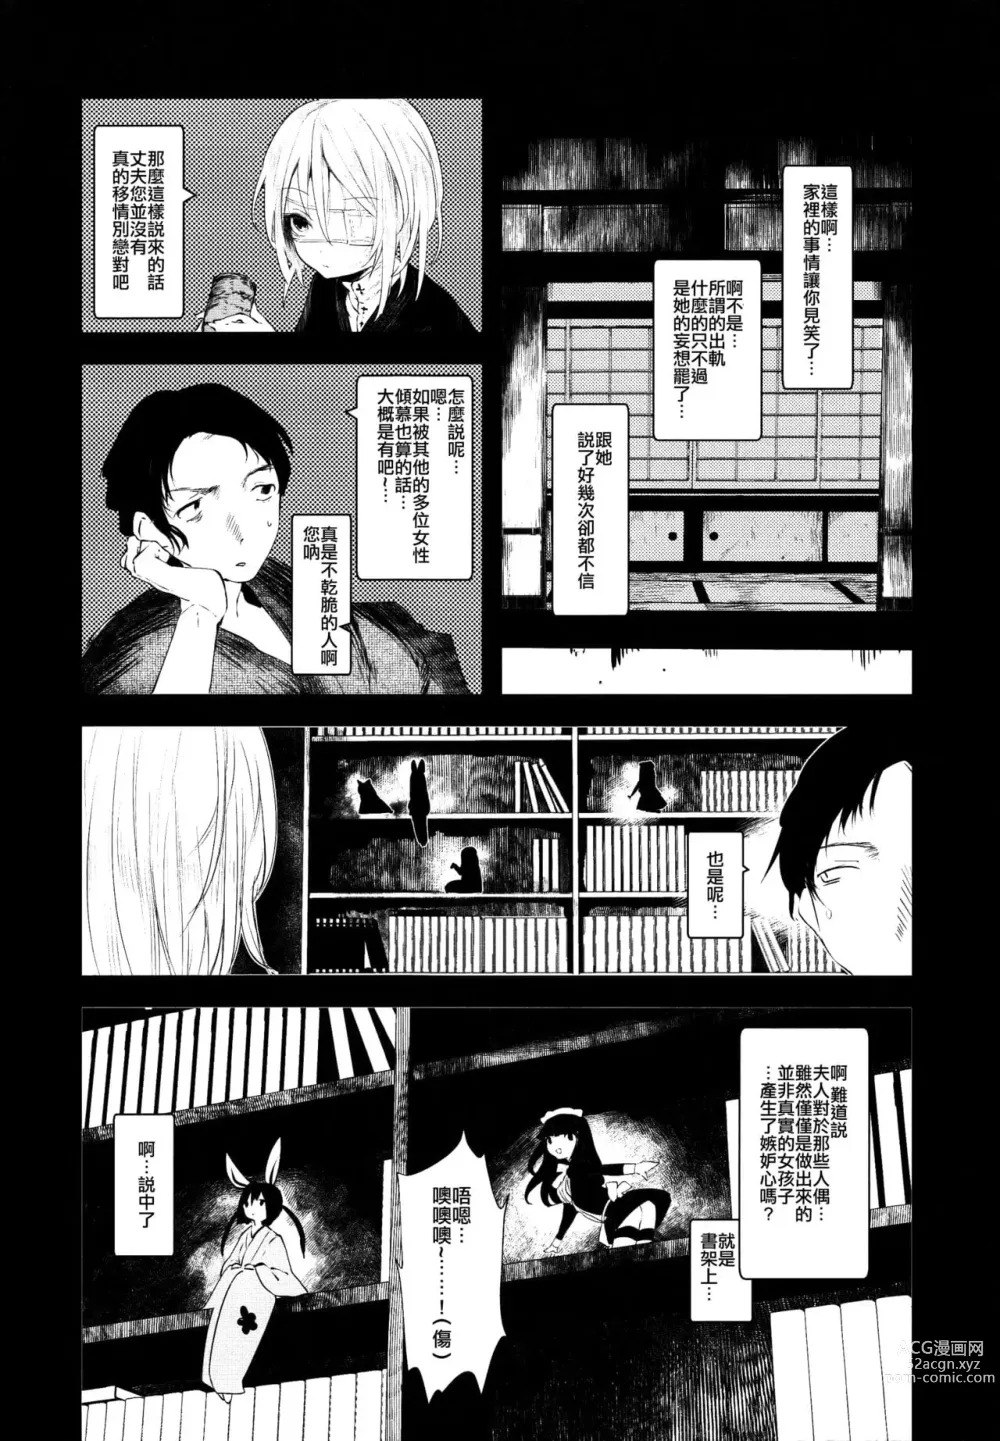 Page 8 of doujinshi 1-gou collection